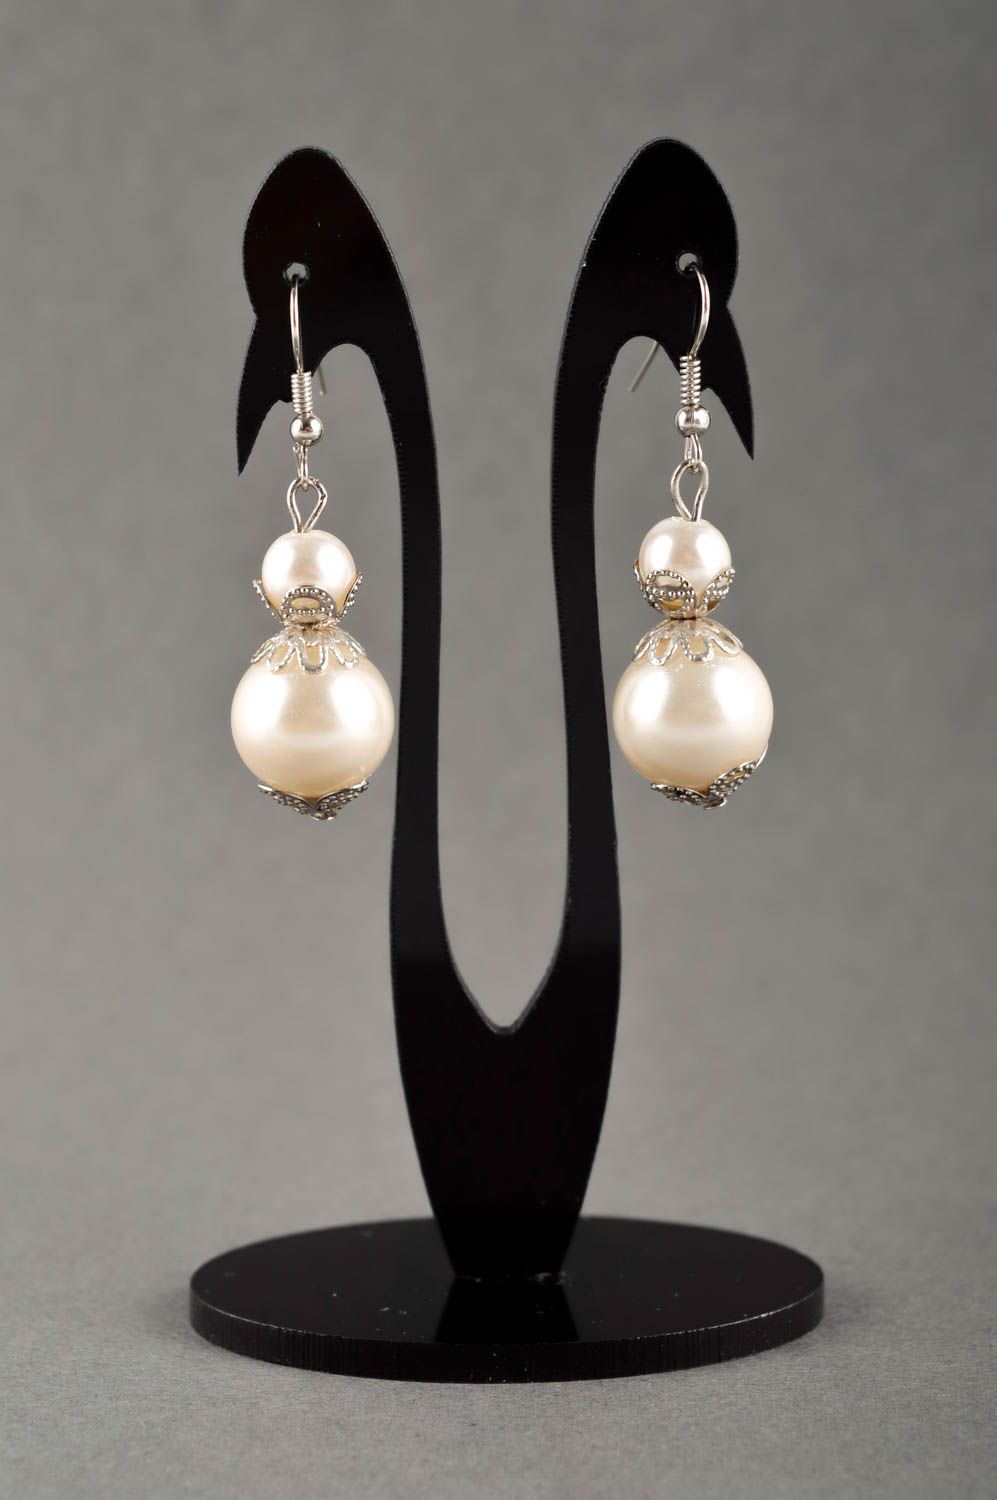 Homemade jewelry designer earrings cute earrings fashion accessories gift ideas photo 1